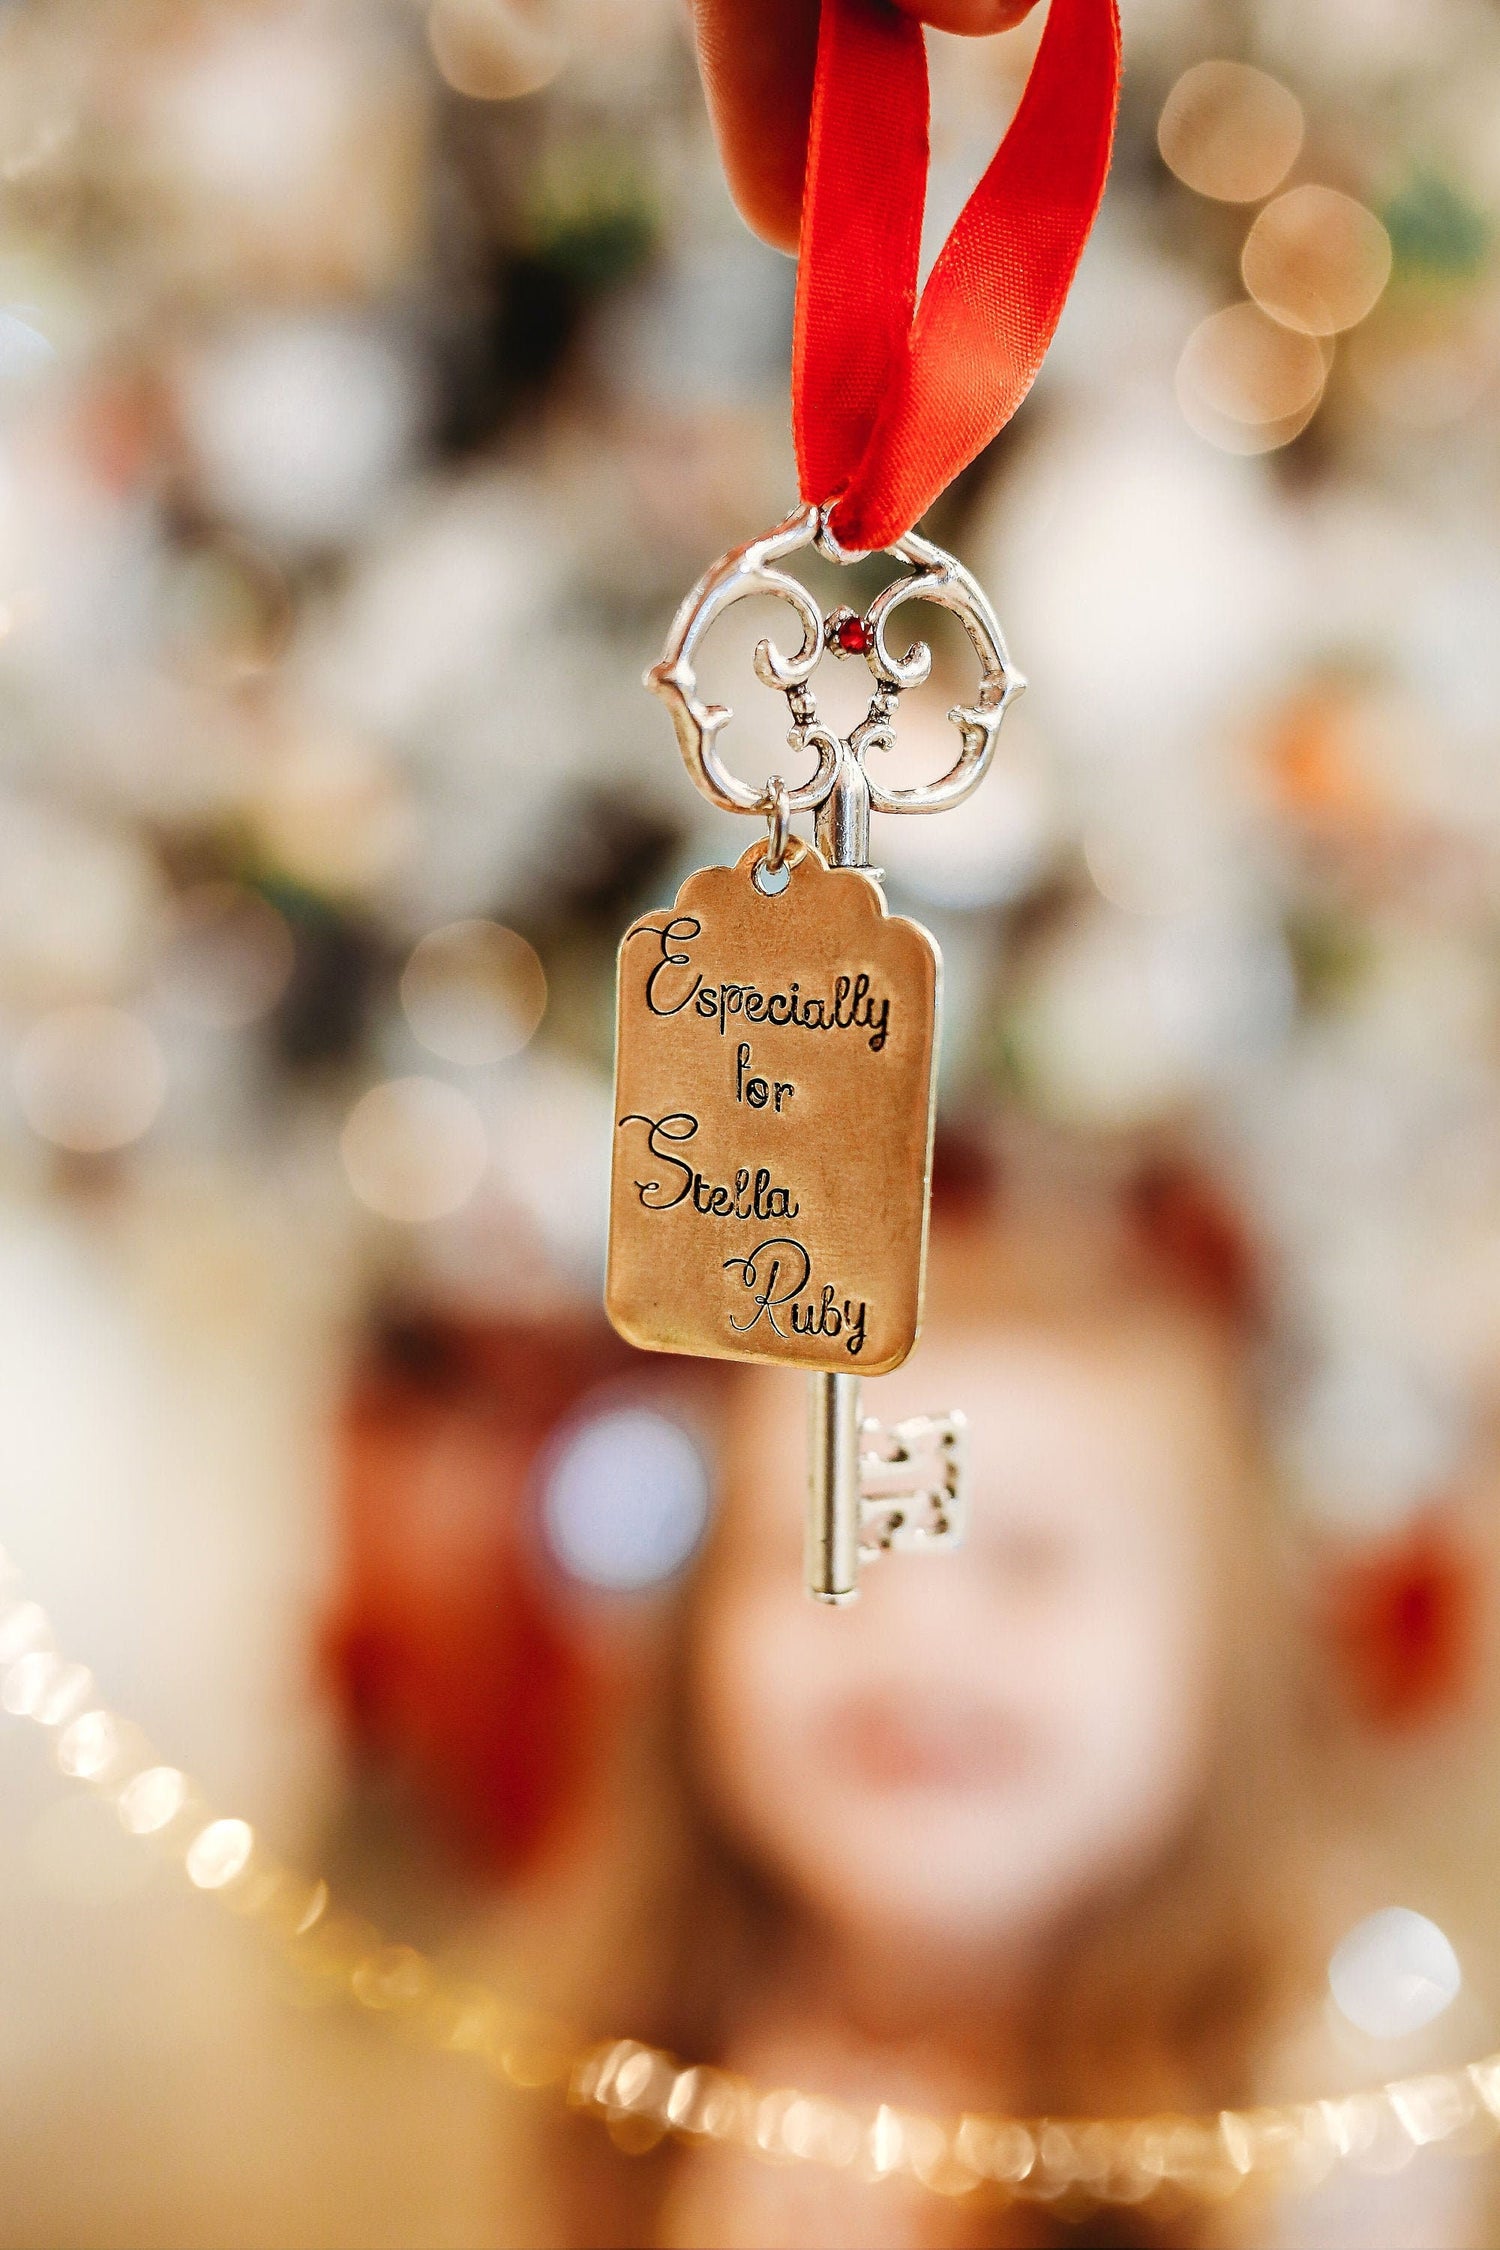 Santa's Magic Key Personalized Christmas Eve Key Santa's Key